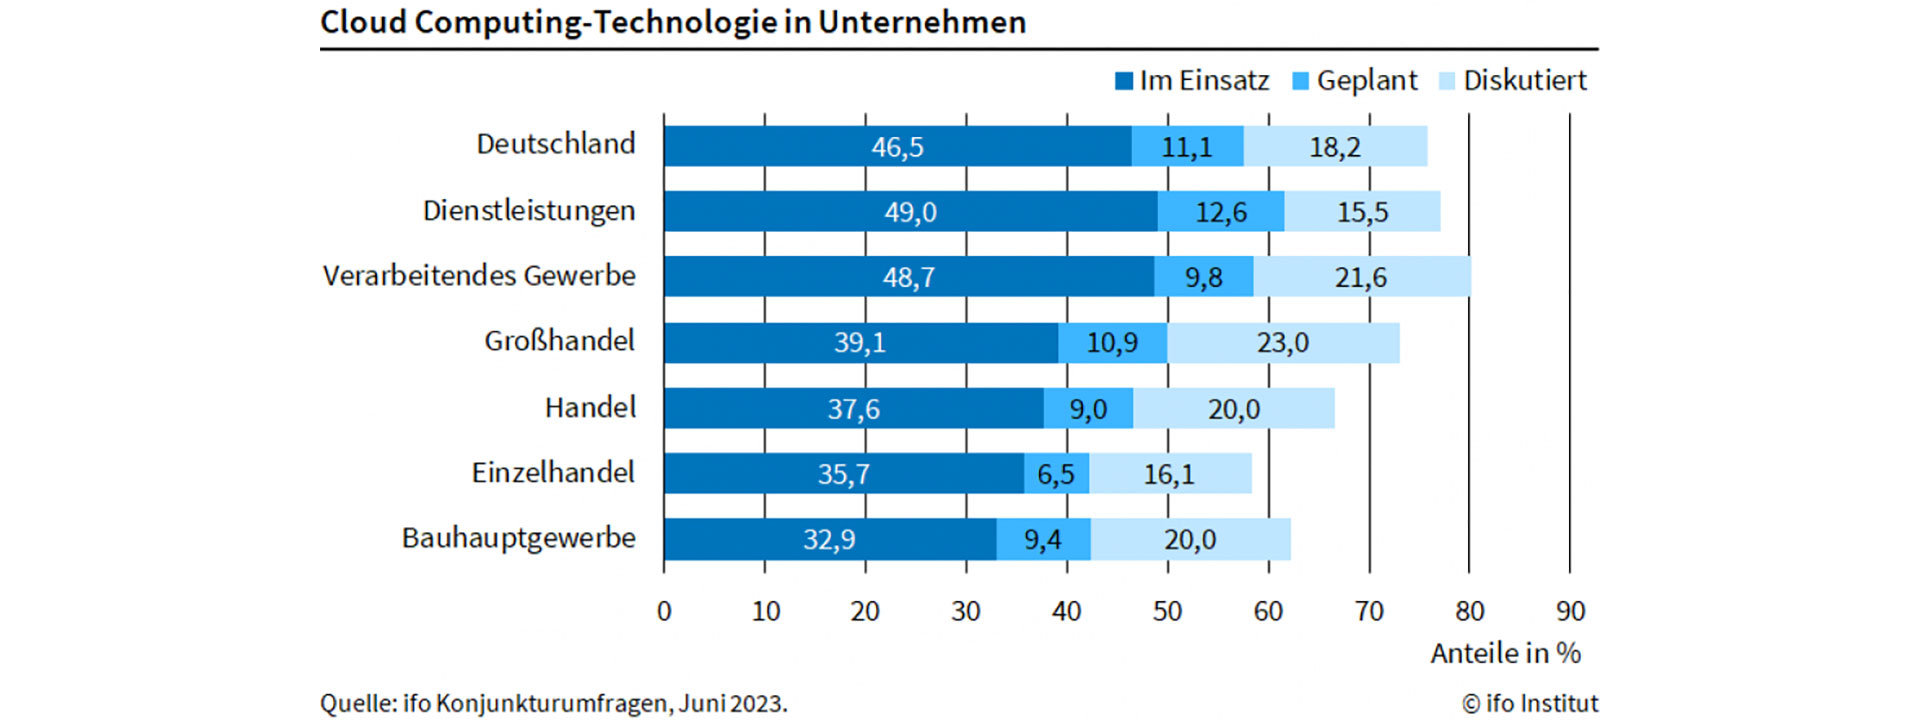 Cloud Computing-Technologien in deutschen Unternehmen / ifo Konjunkturumfragen, Juni 2023